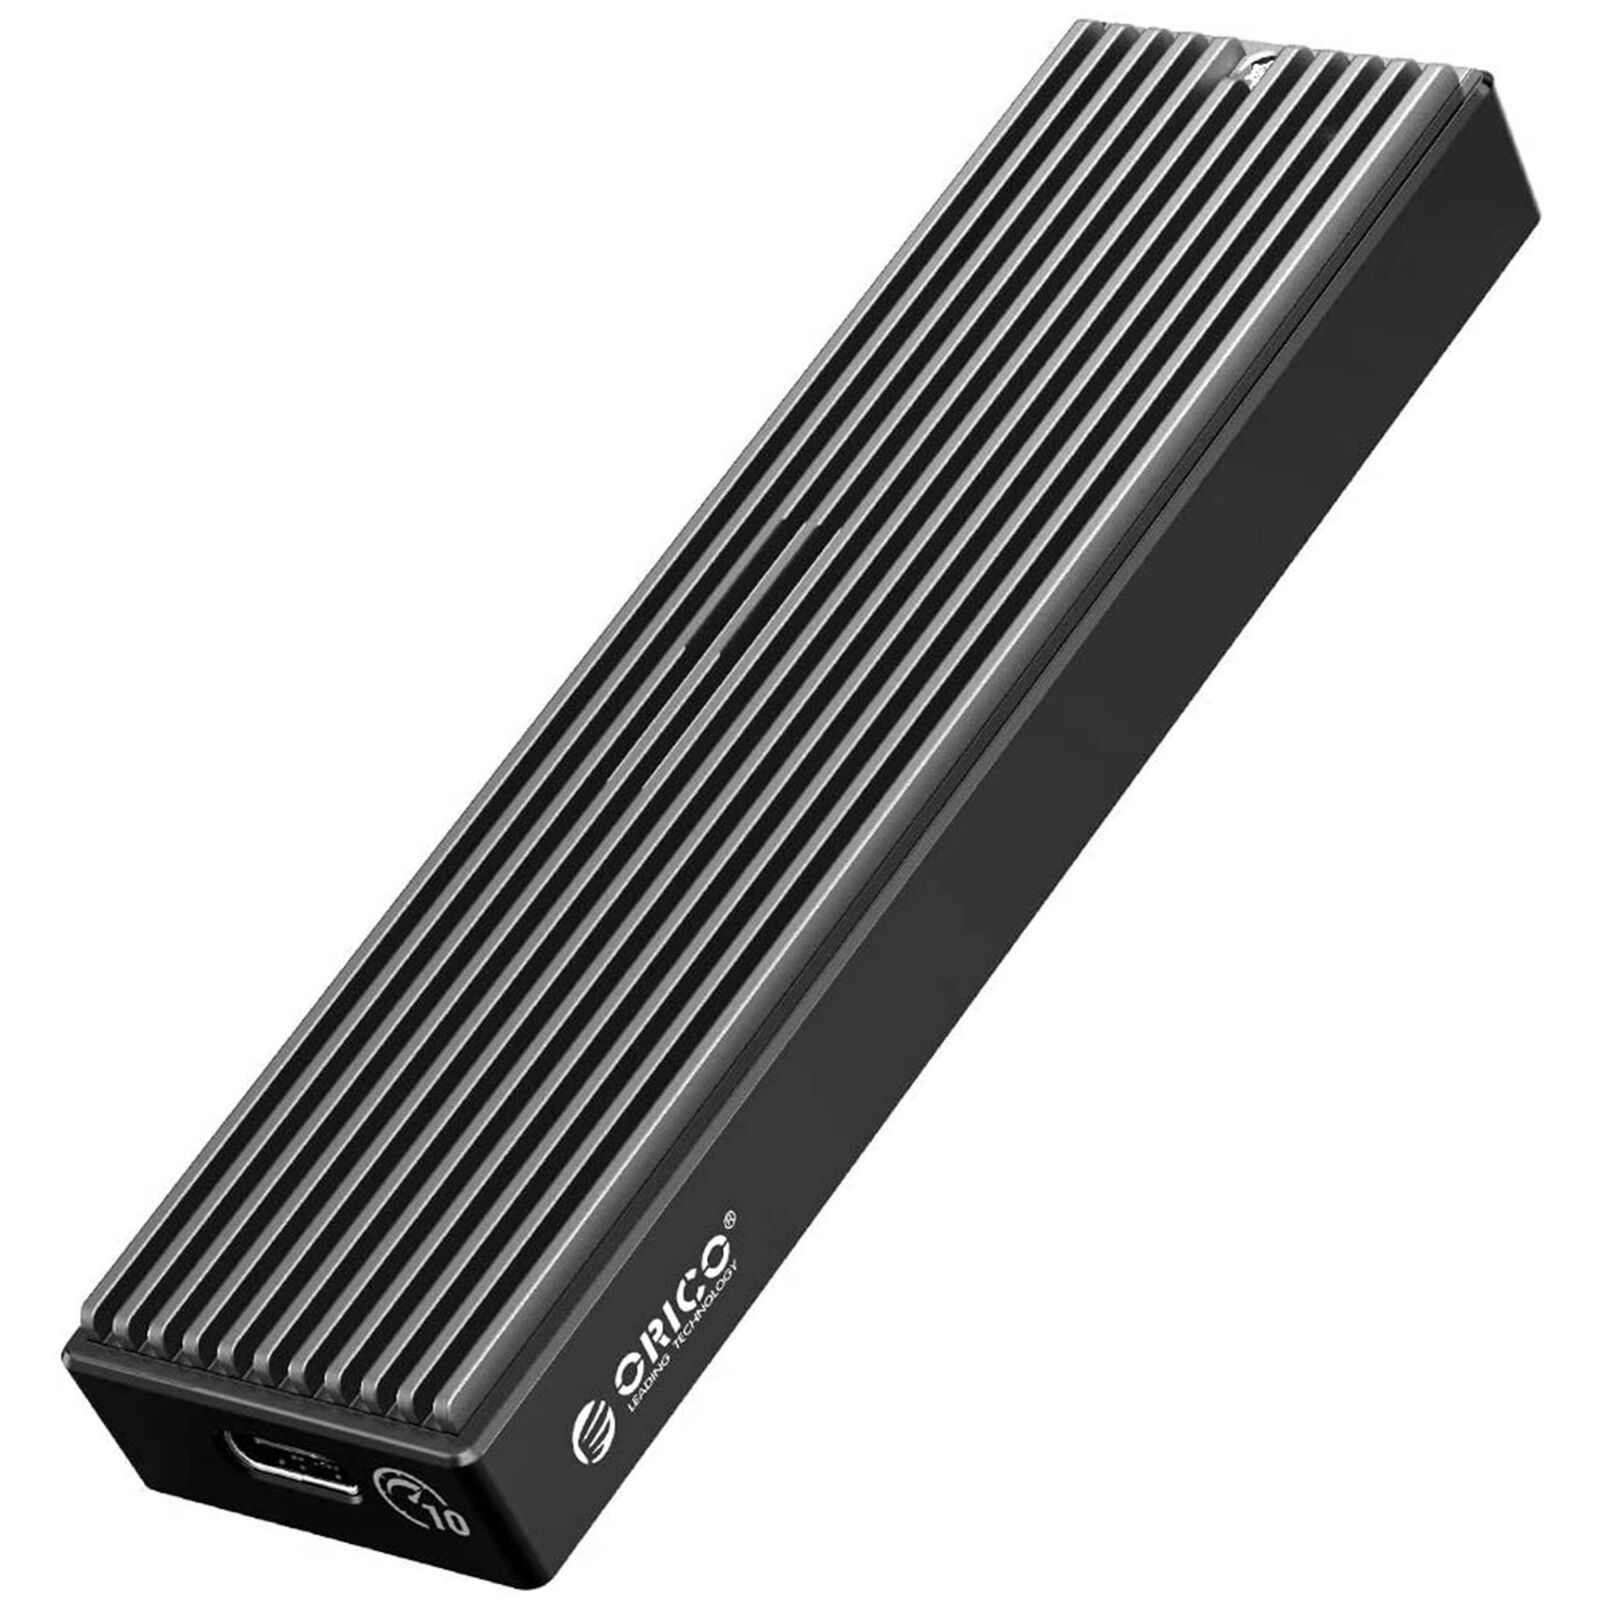 Orico M.2 Nvme SSD Enclodure Caddy Adapter Dock For Disc Pcie Case Desktop